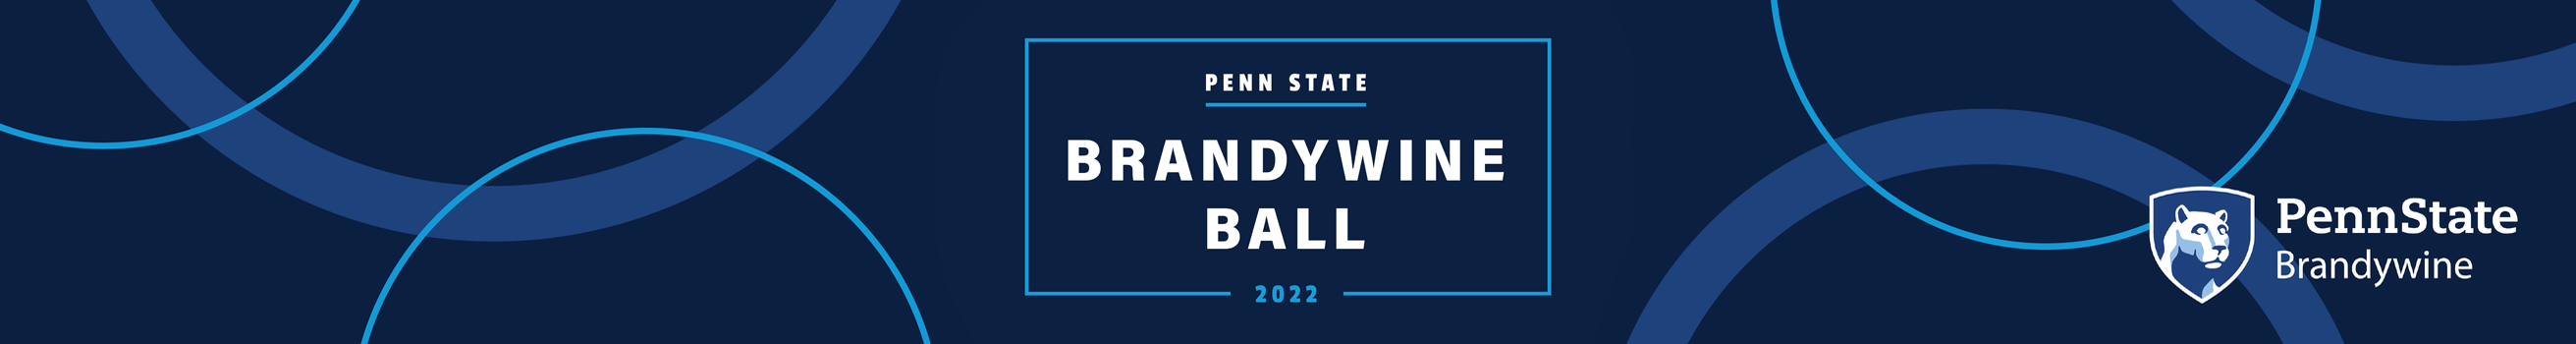 Penn State Brandywine Ball 2022